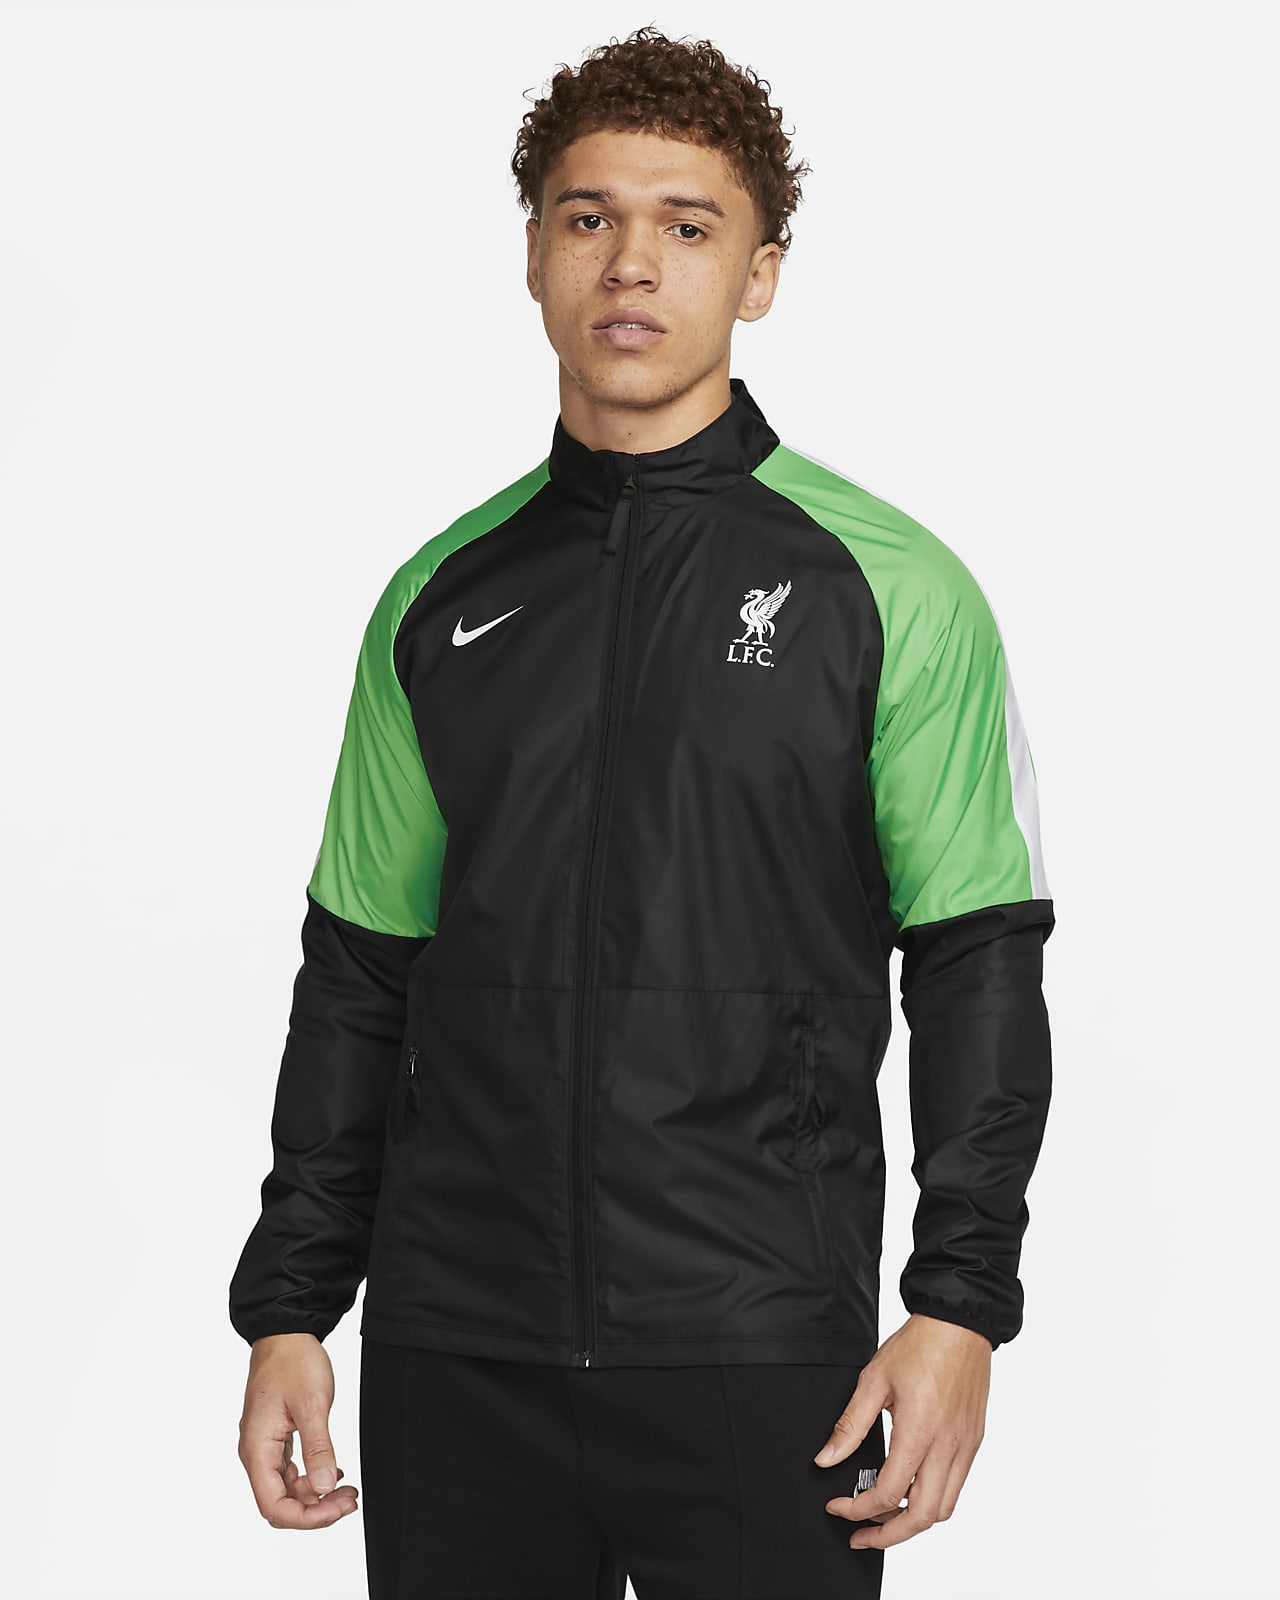 Liverpool F.C. Repel Academy AWF Men's Nike Football Jacket